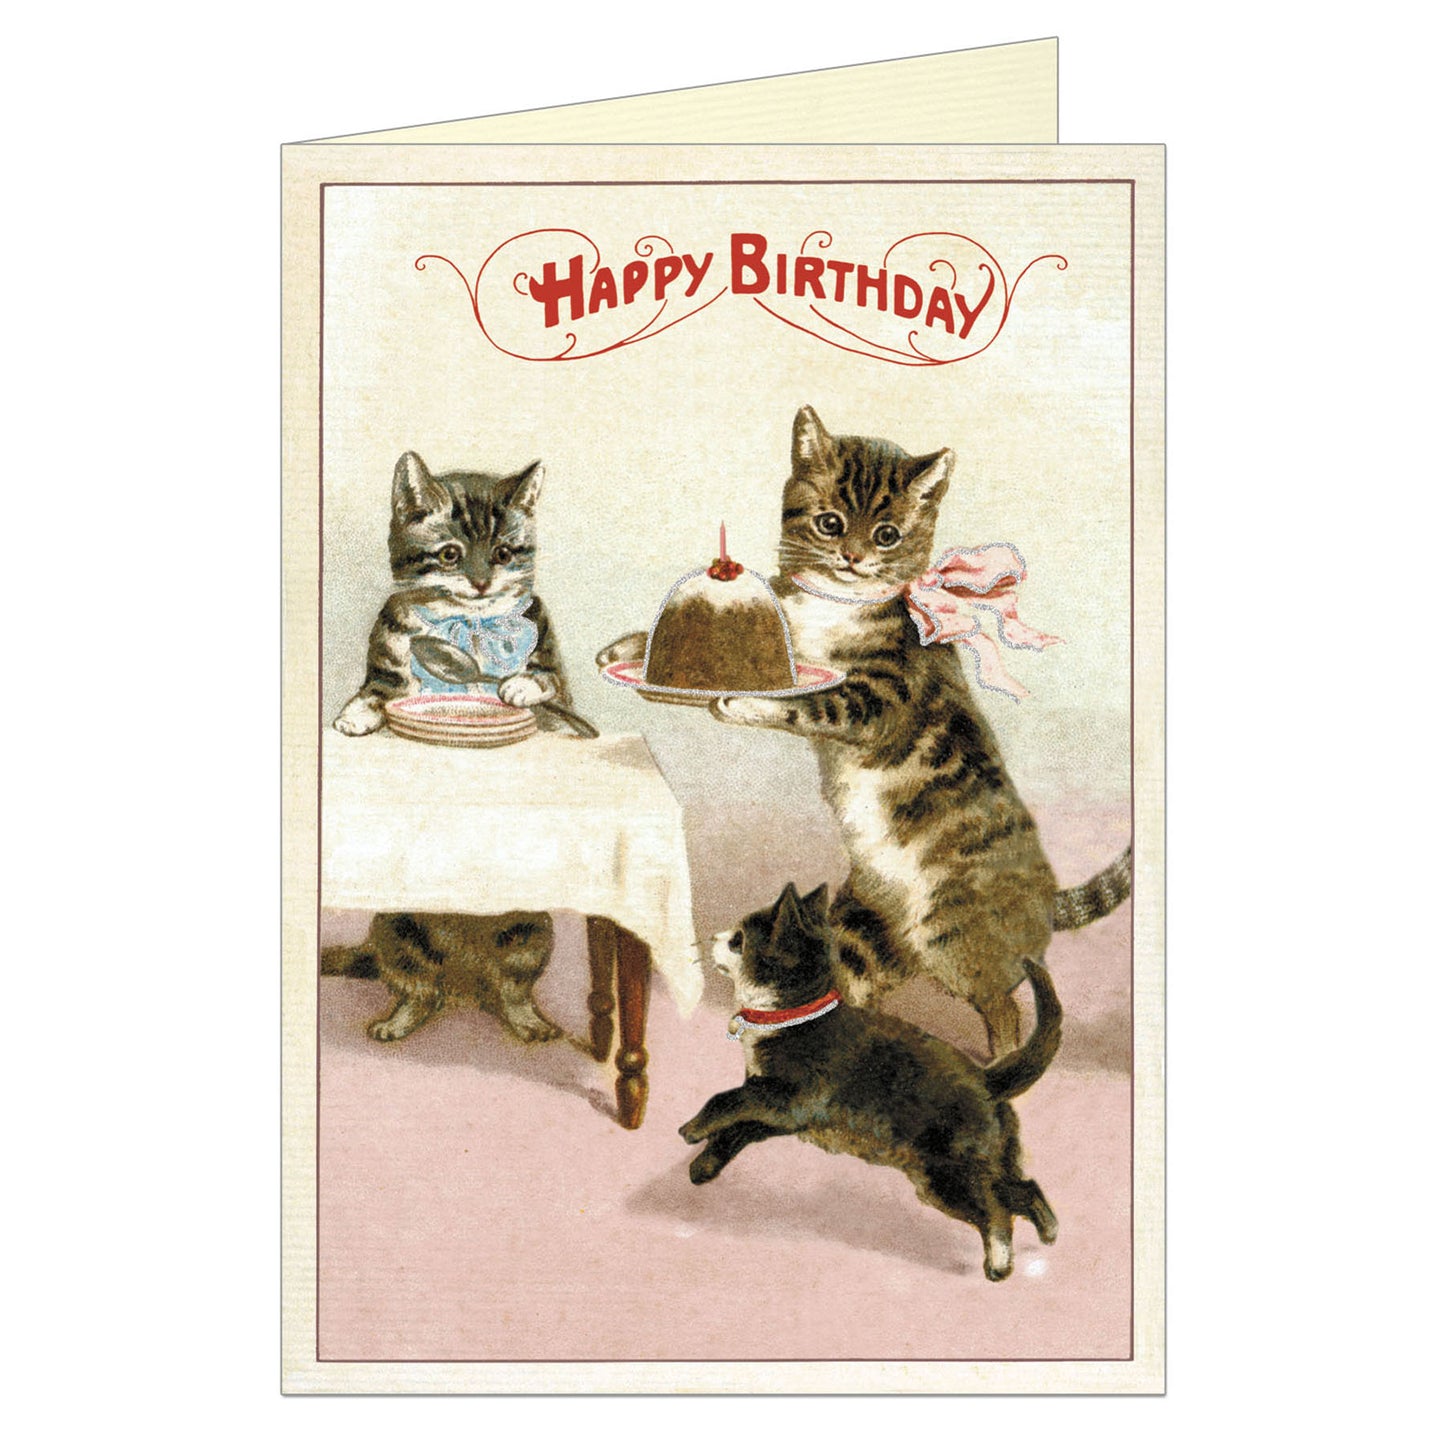    Happy_Birthday_Cats_Greeting_Card